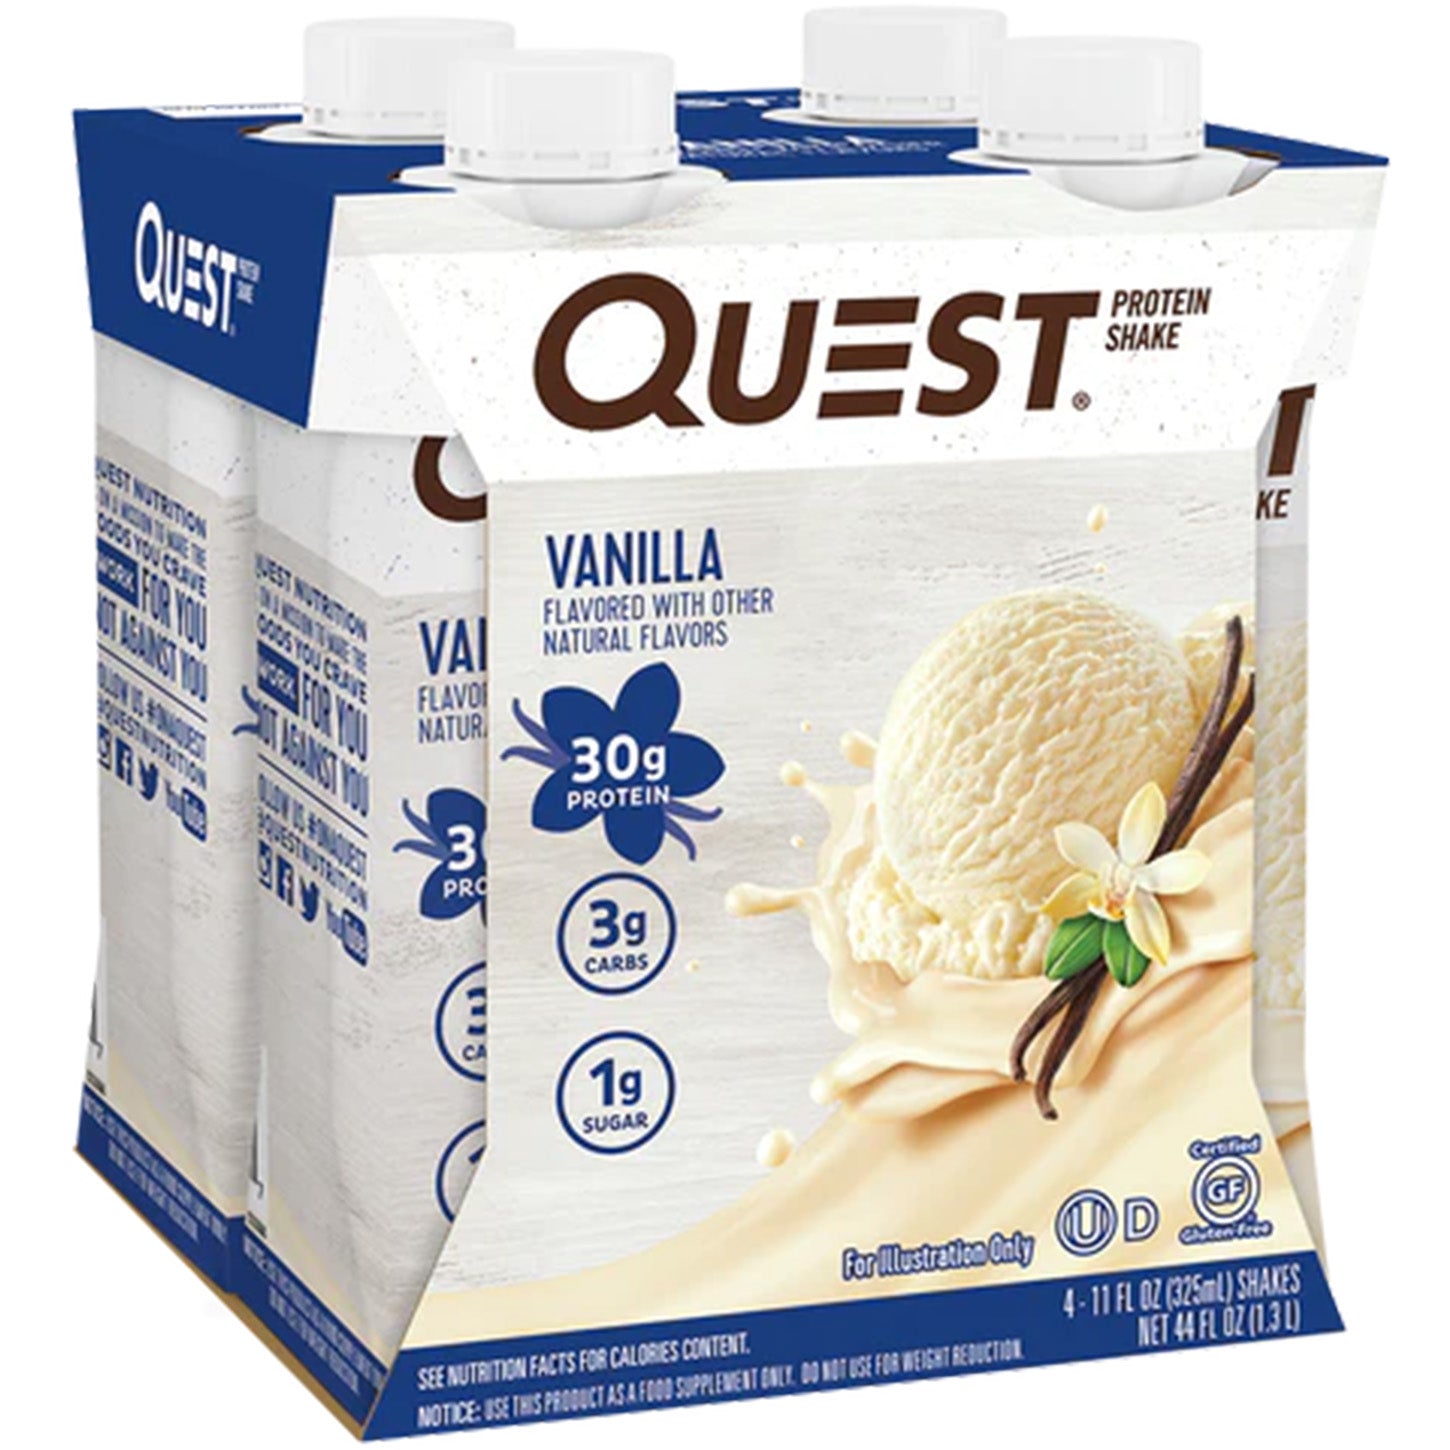 Protein Shake de Quest Nutrition | ProHealth Shop [Panamá]